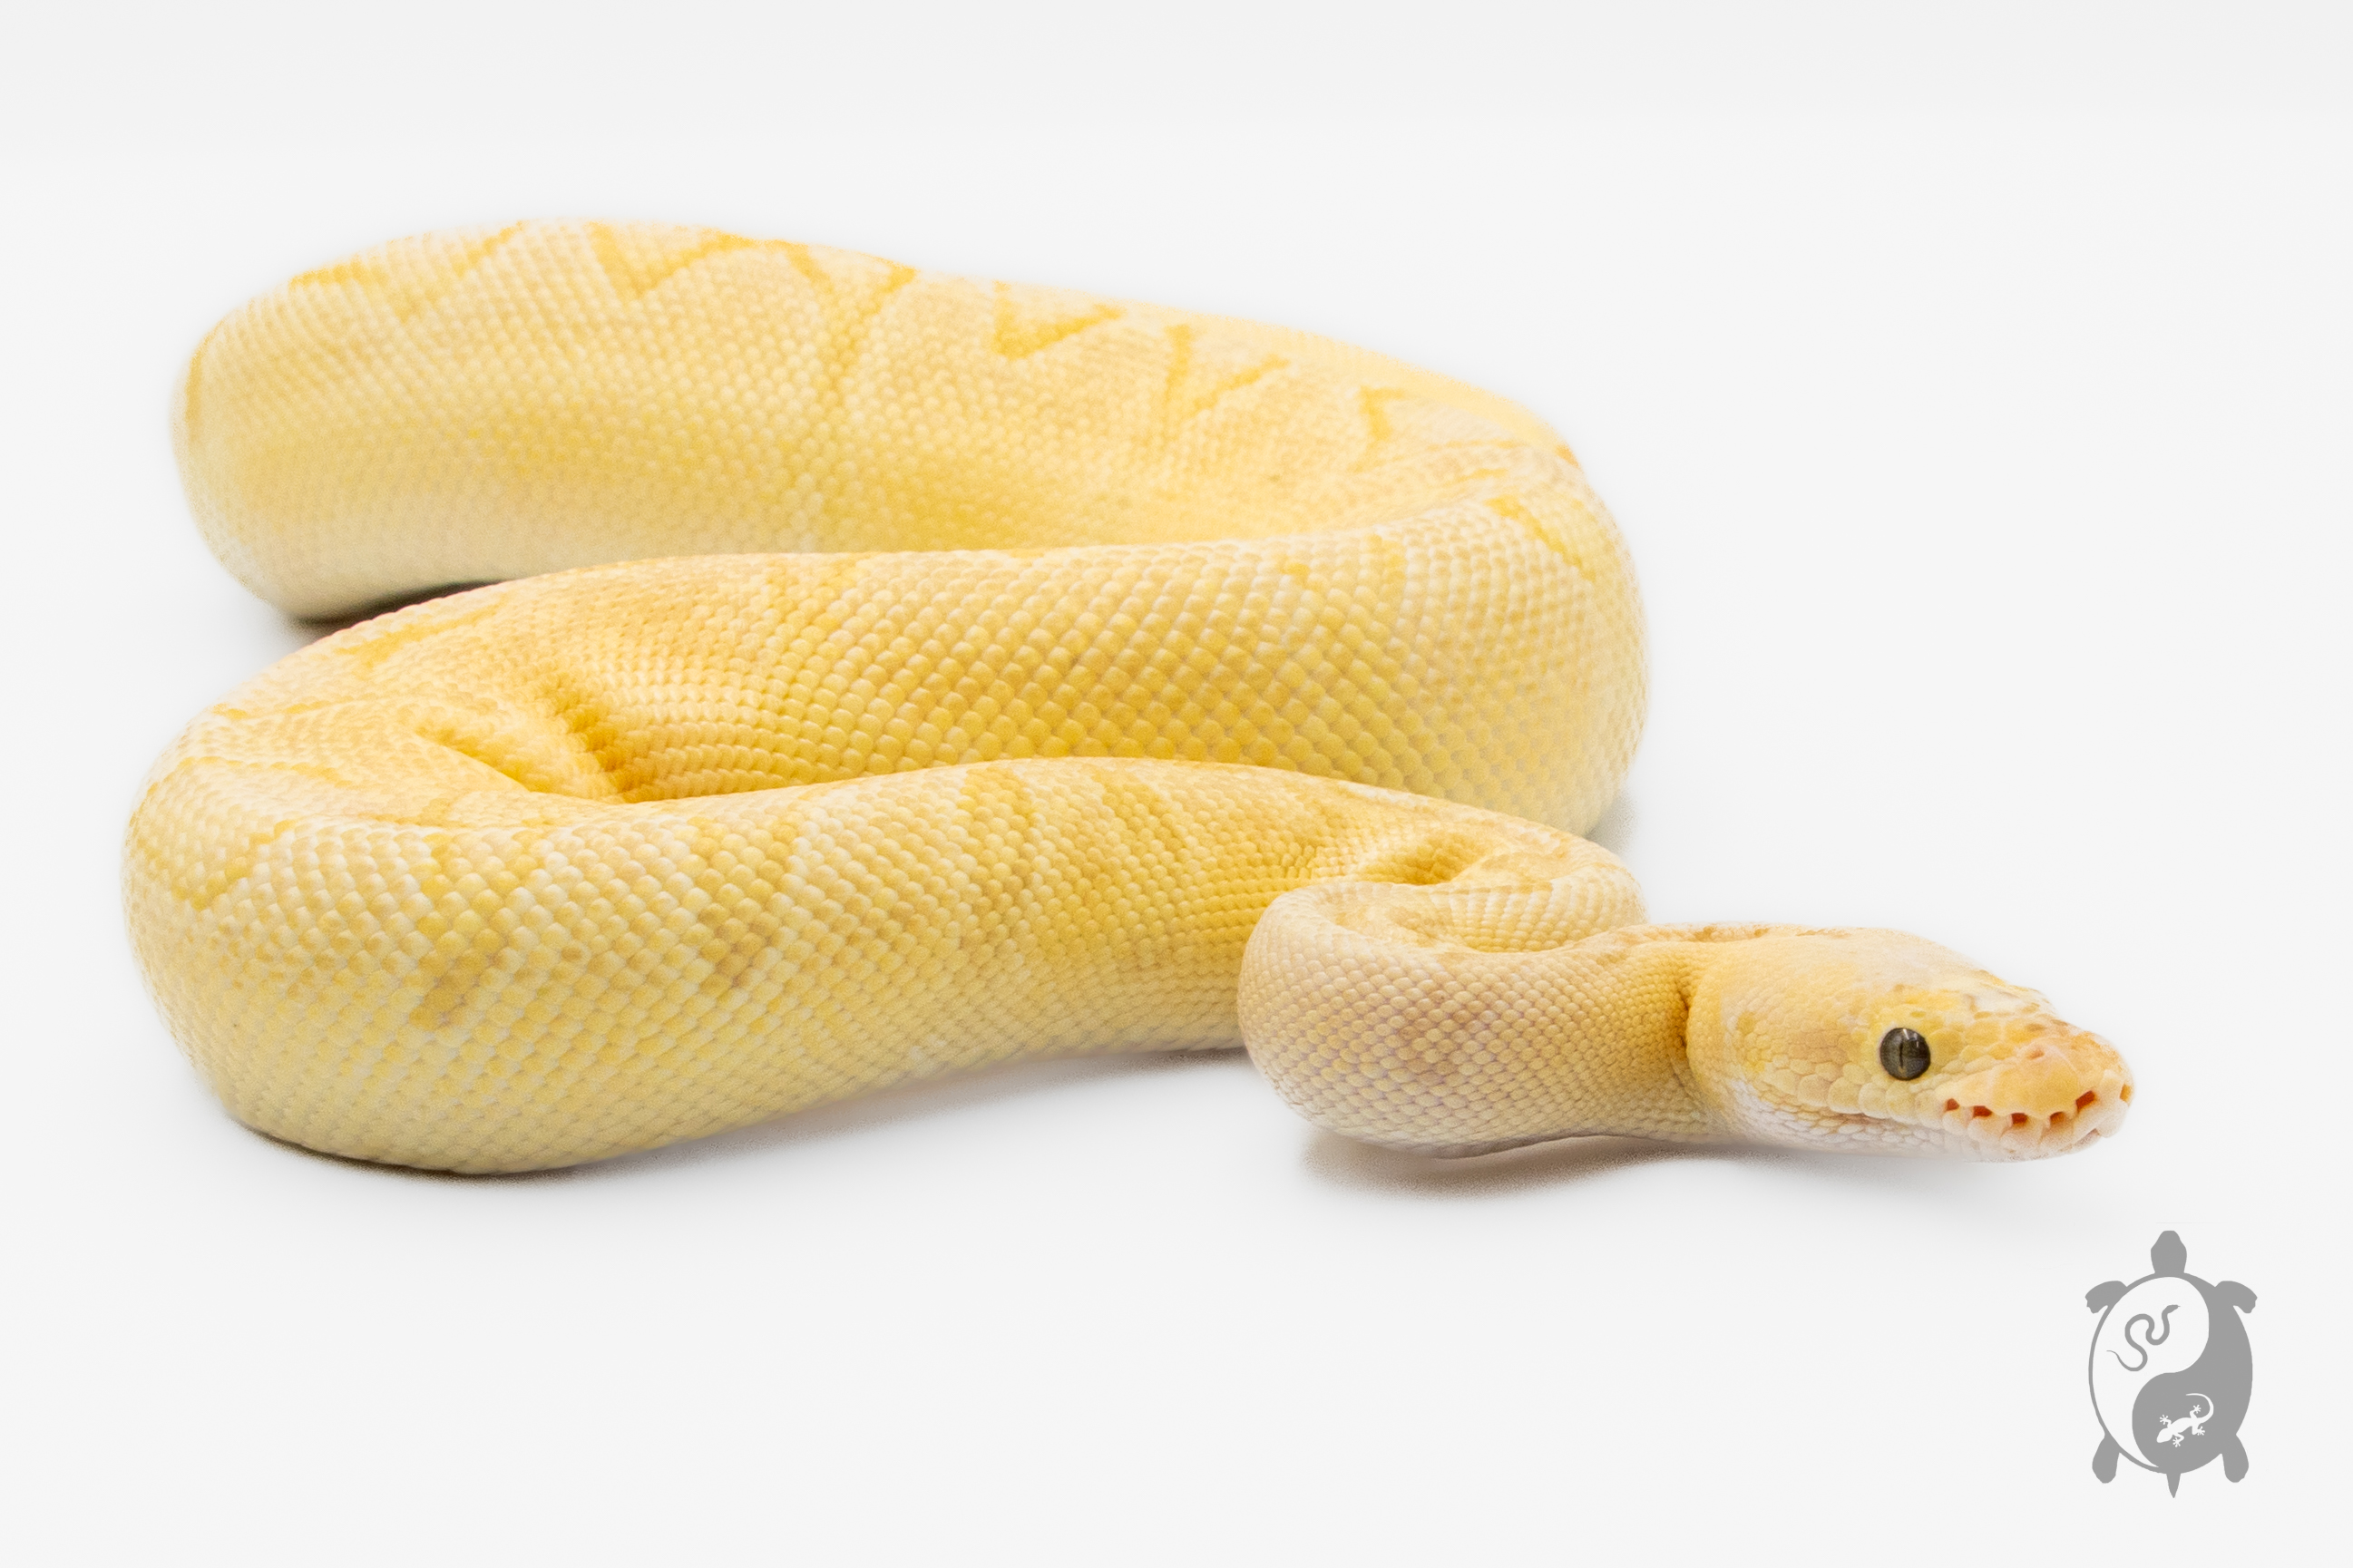 Python royal - Python regius Super Pastel Banana Enchi Clown - Adulte